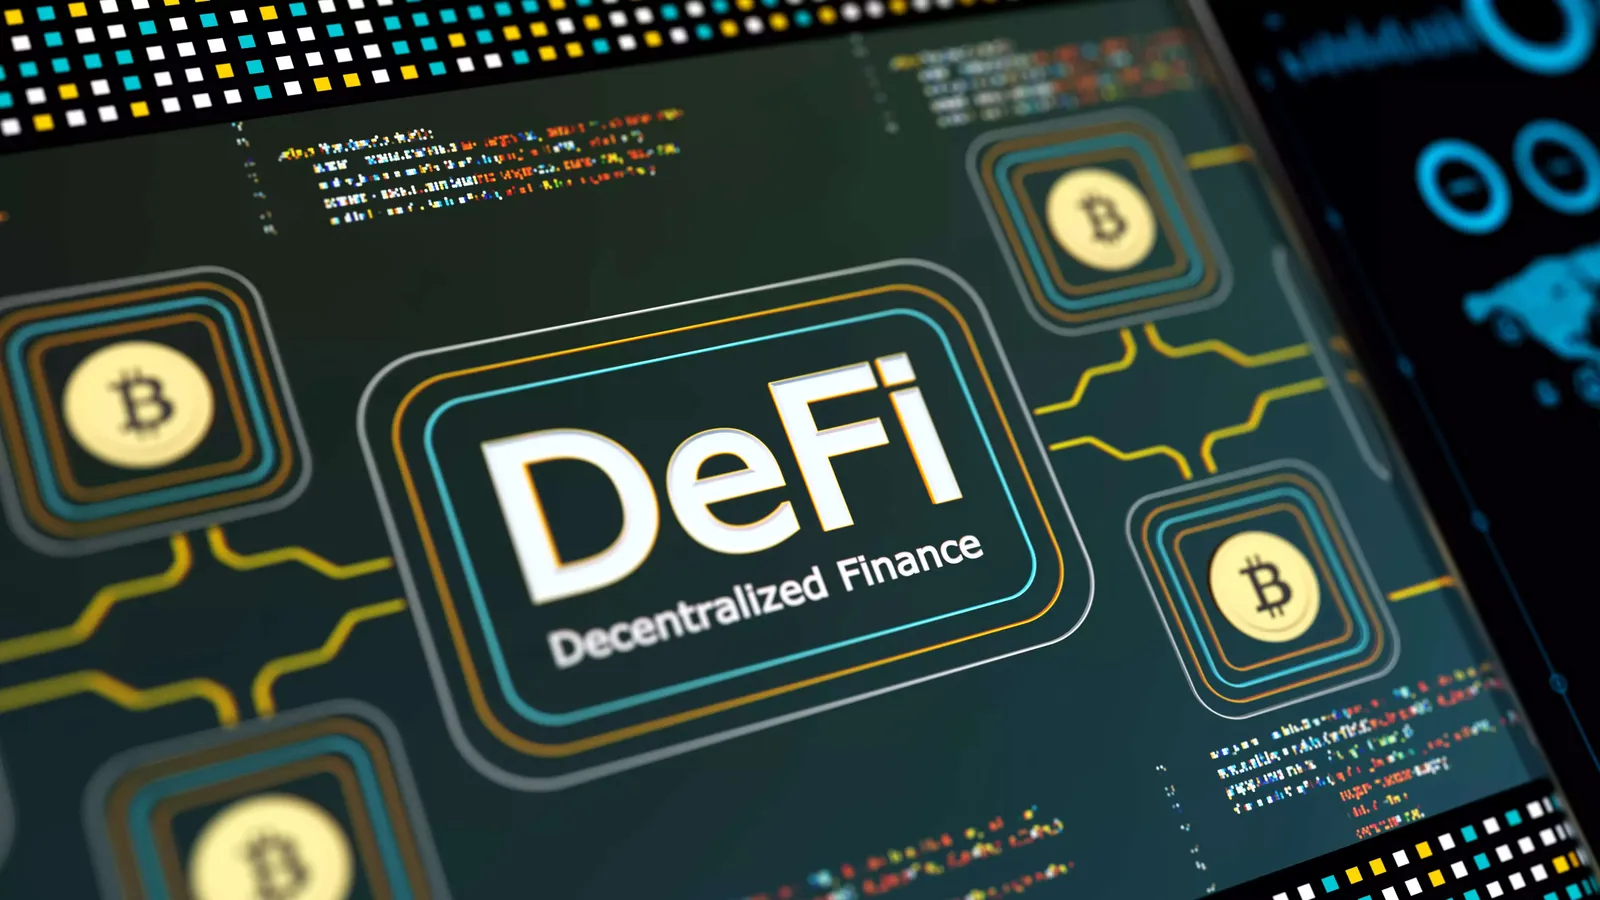 Bank of Japan experts explain what decentralized finance "DeFi" has a 